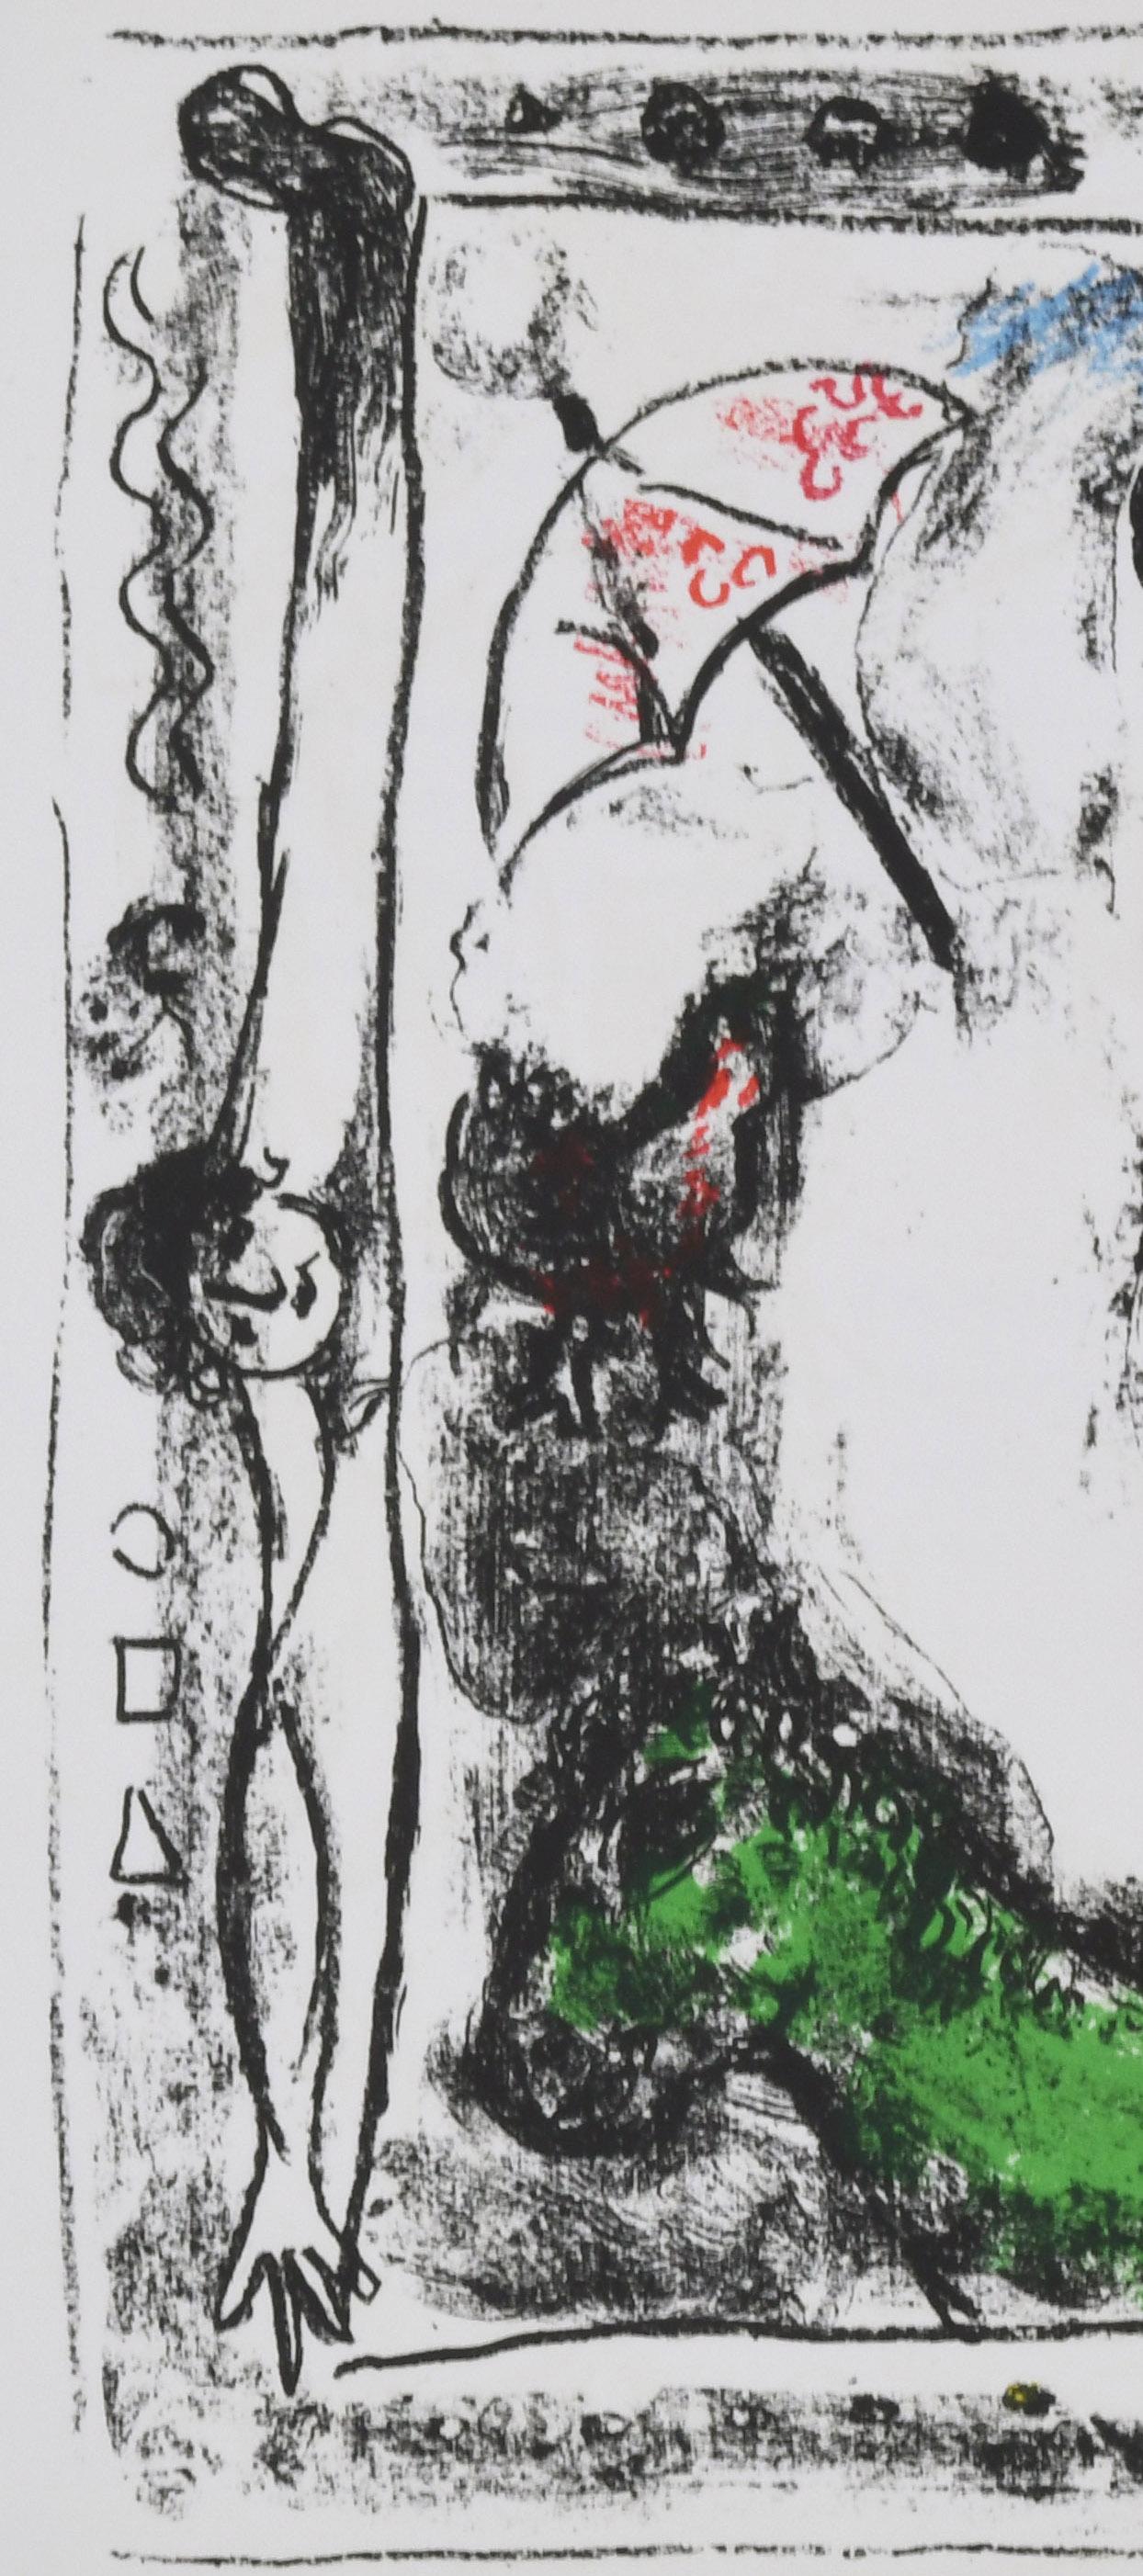 Derriere le Miroir-Double-Double- Seite (Behind the Looking Glass Double Page) (Französische Schule), Print, von Marc Chagall